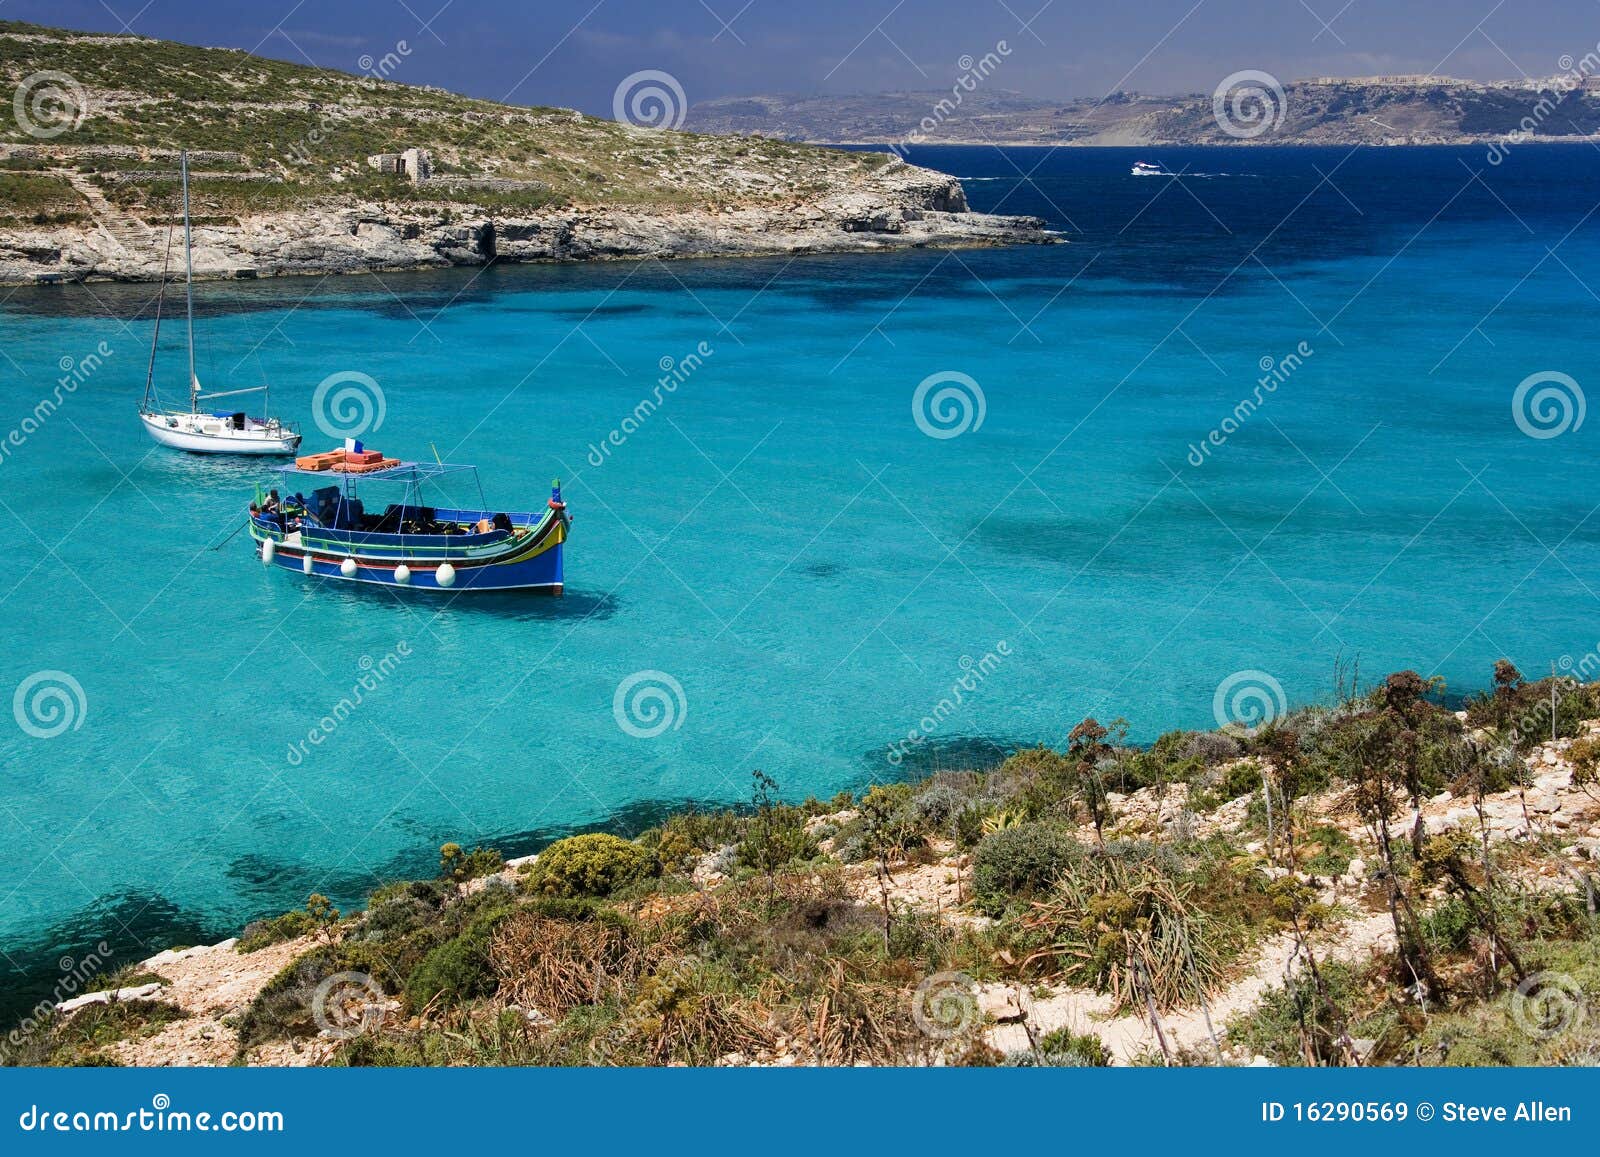 blue lagoon - island of comino - malta